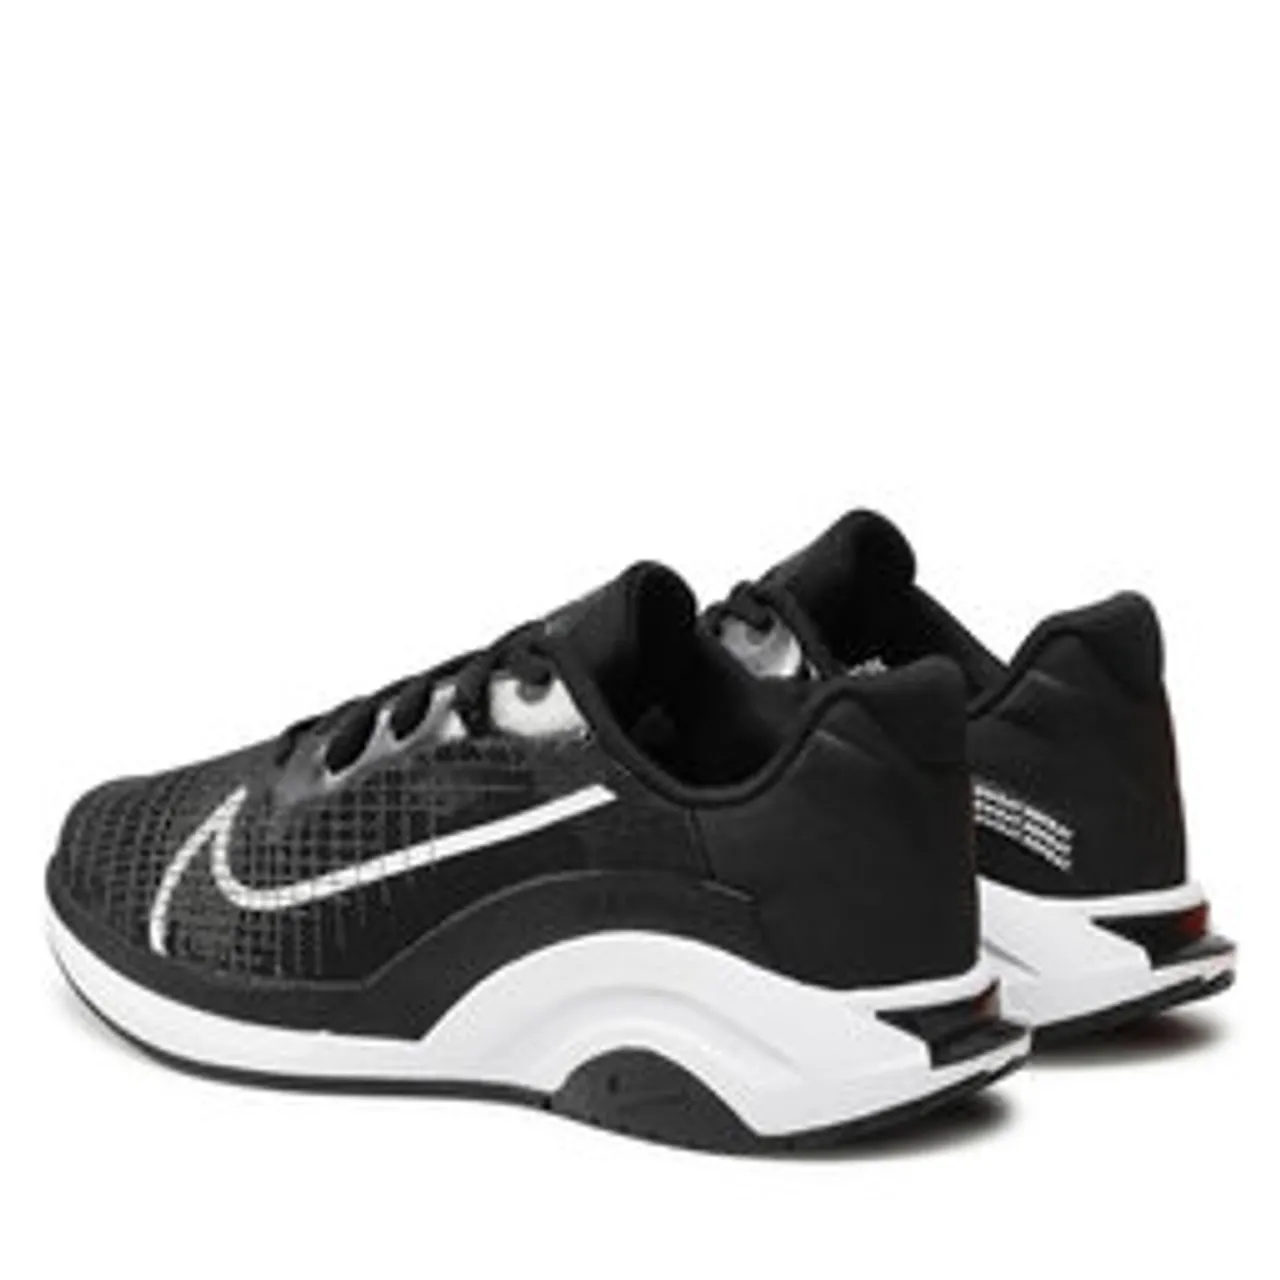 Schuhe Nike Zoomx Superrep Surge CK9406 001 Blak/White/Black